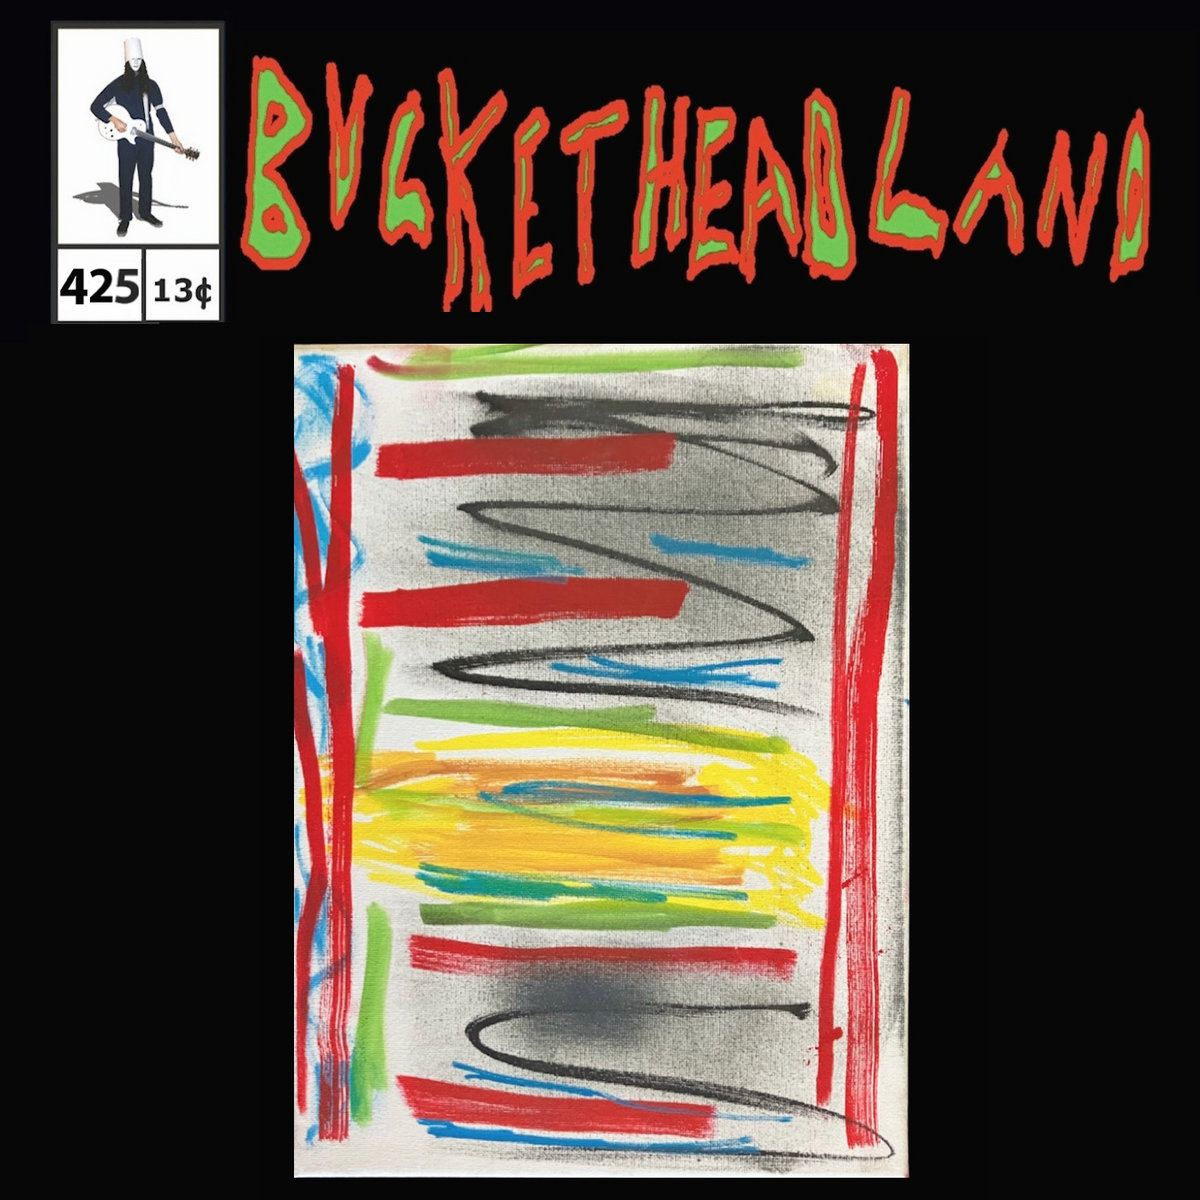 BUCKETHEAD - Pike 425 - Metamorphosis cover 